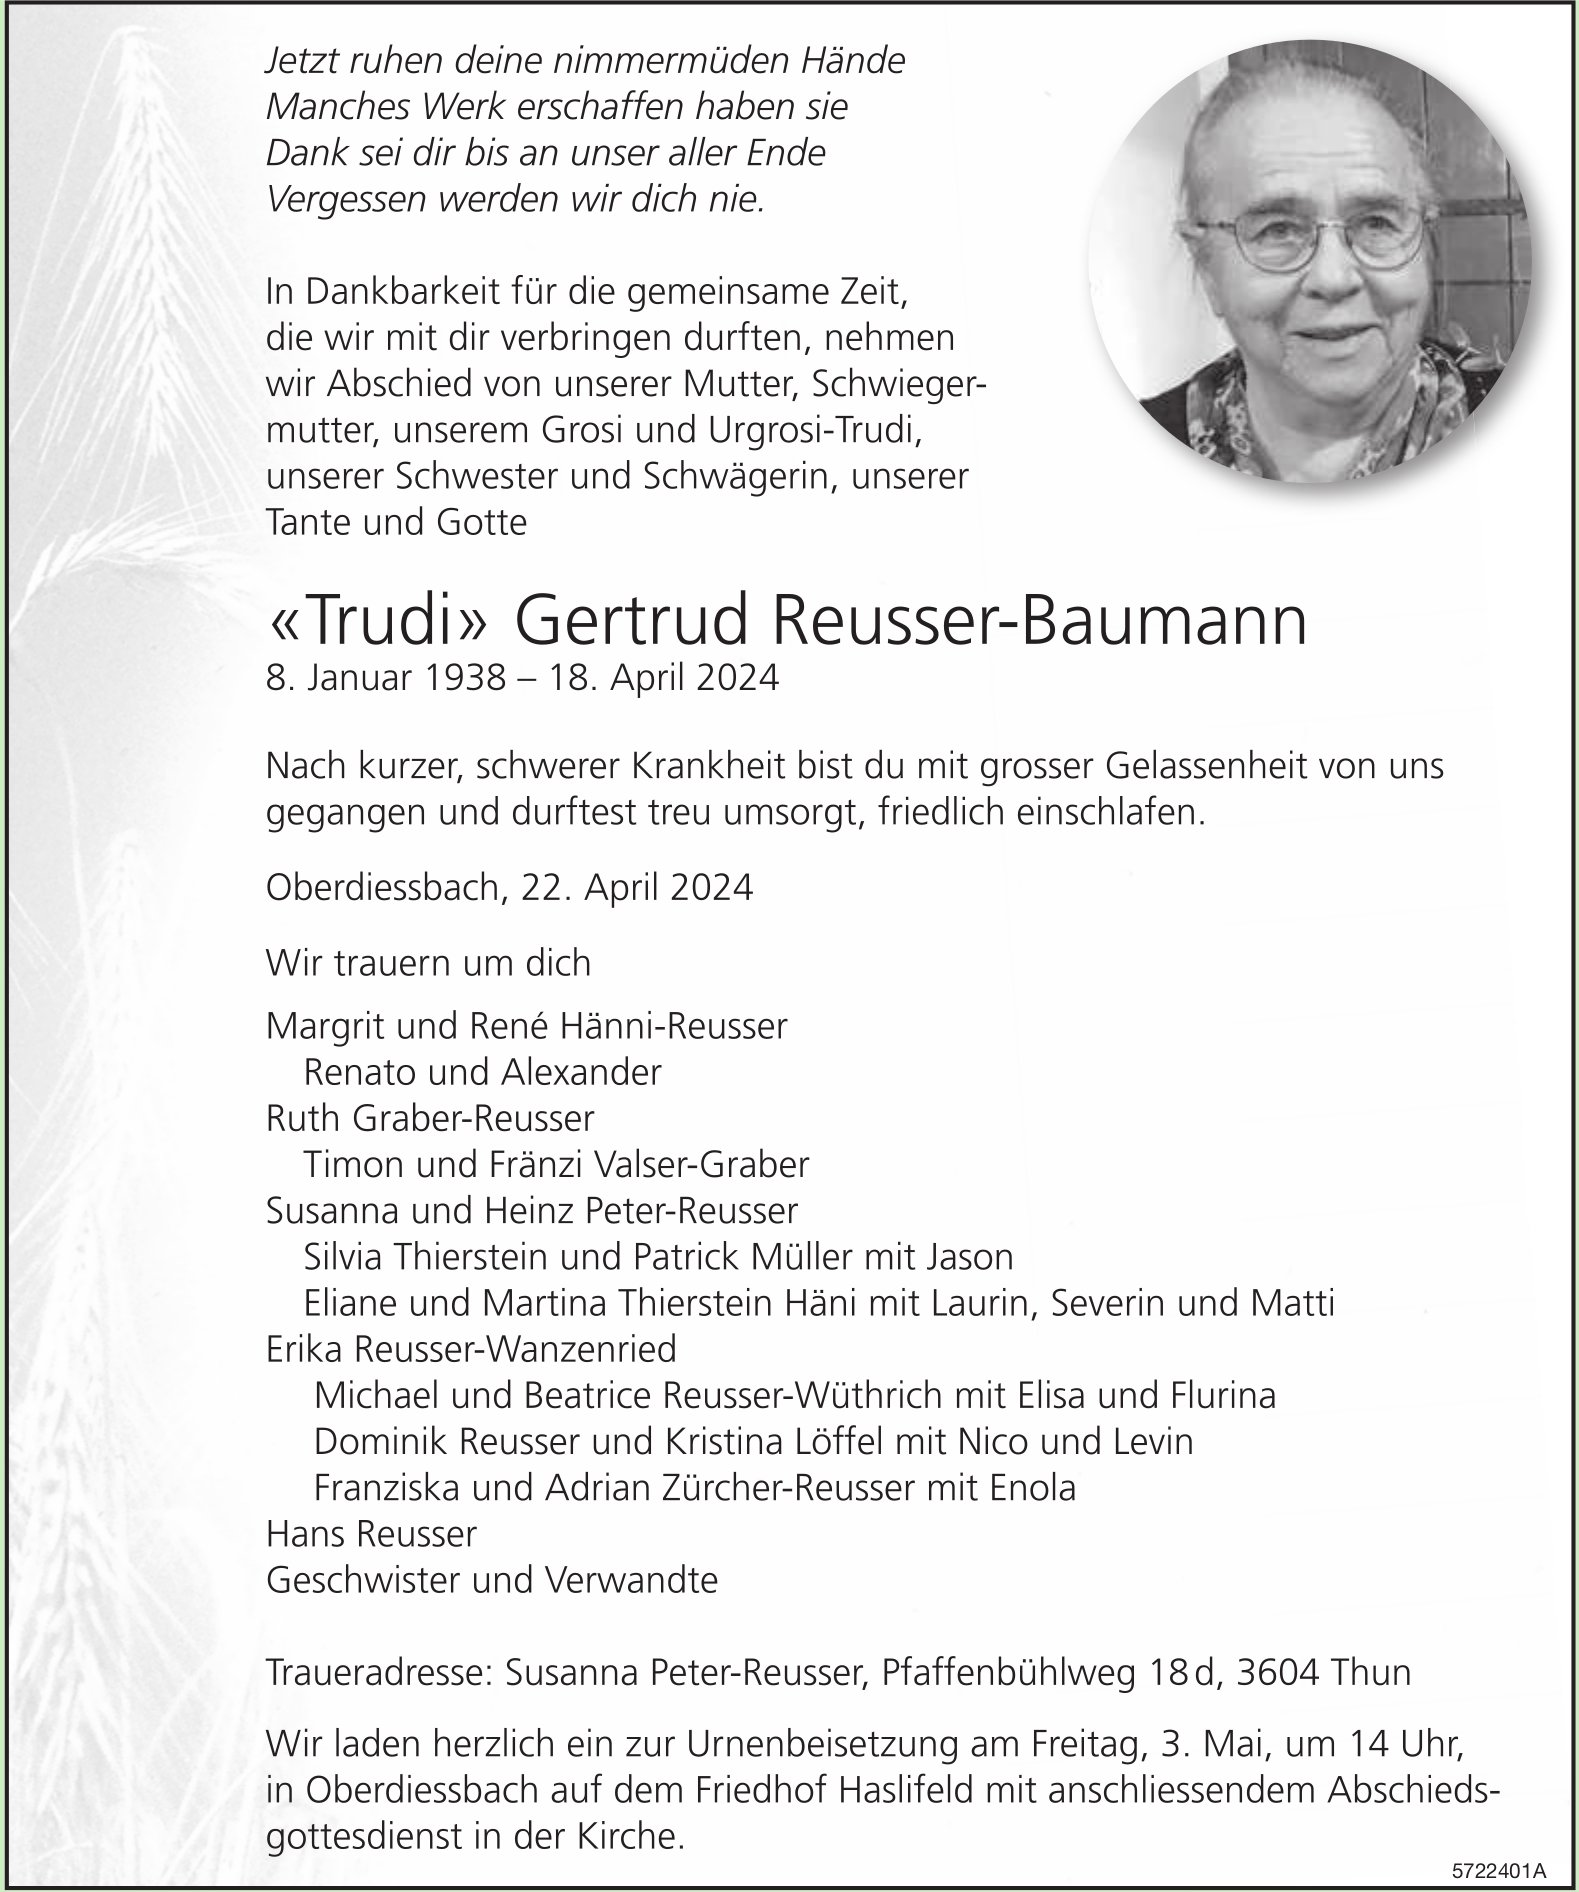 Reusser-Baumann «Trudi» Gertrud, April 2024 / TA